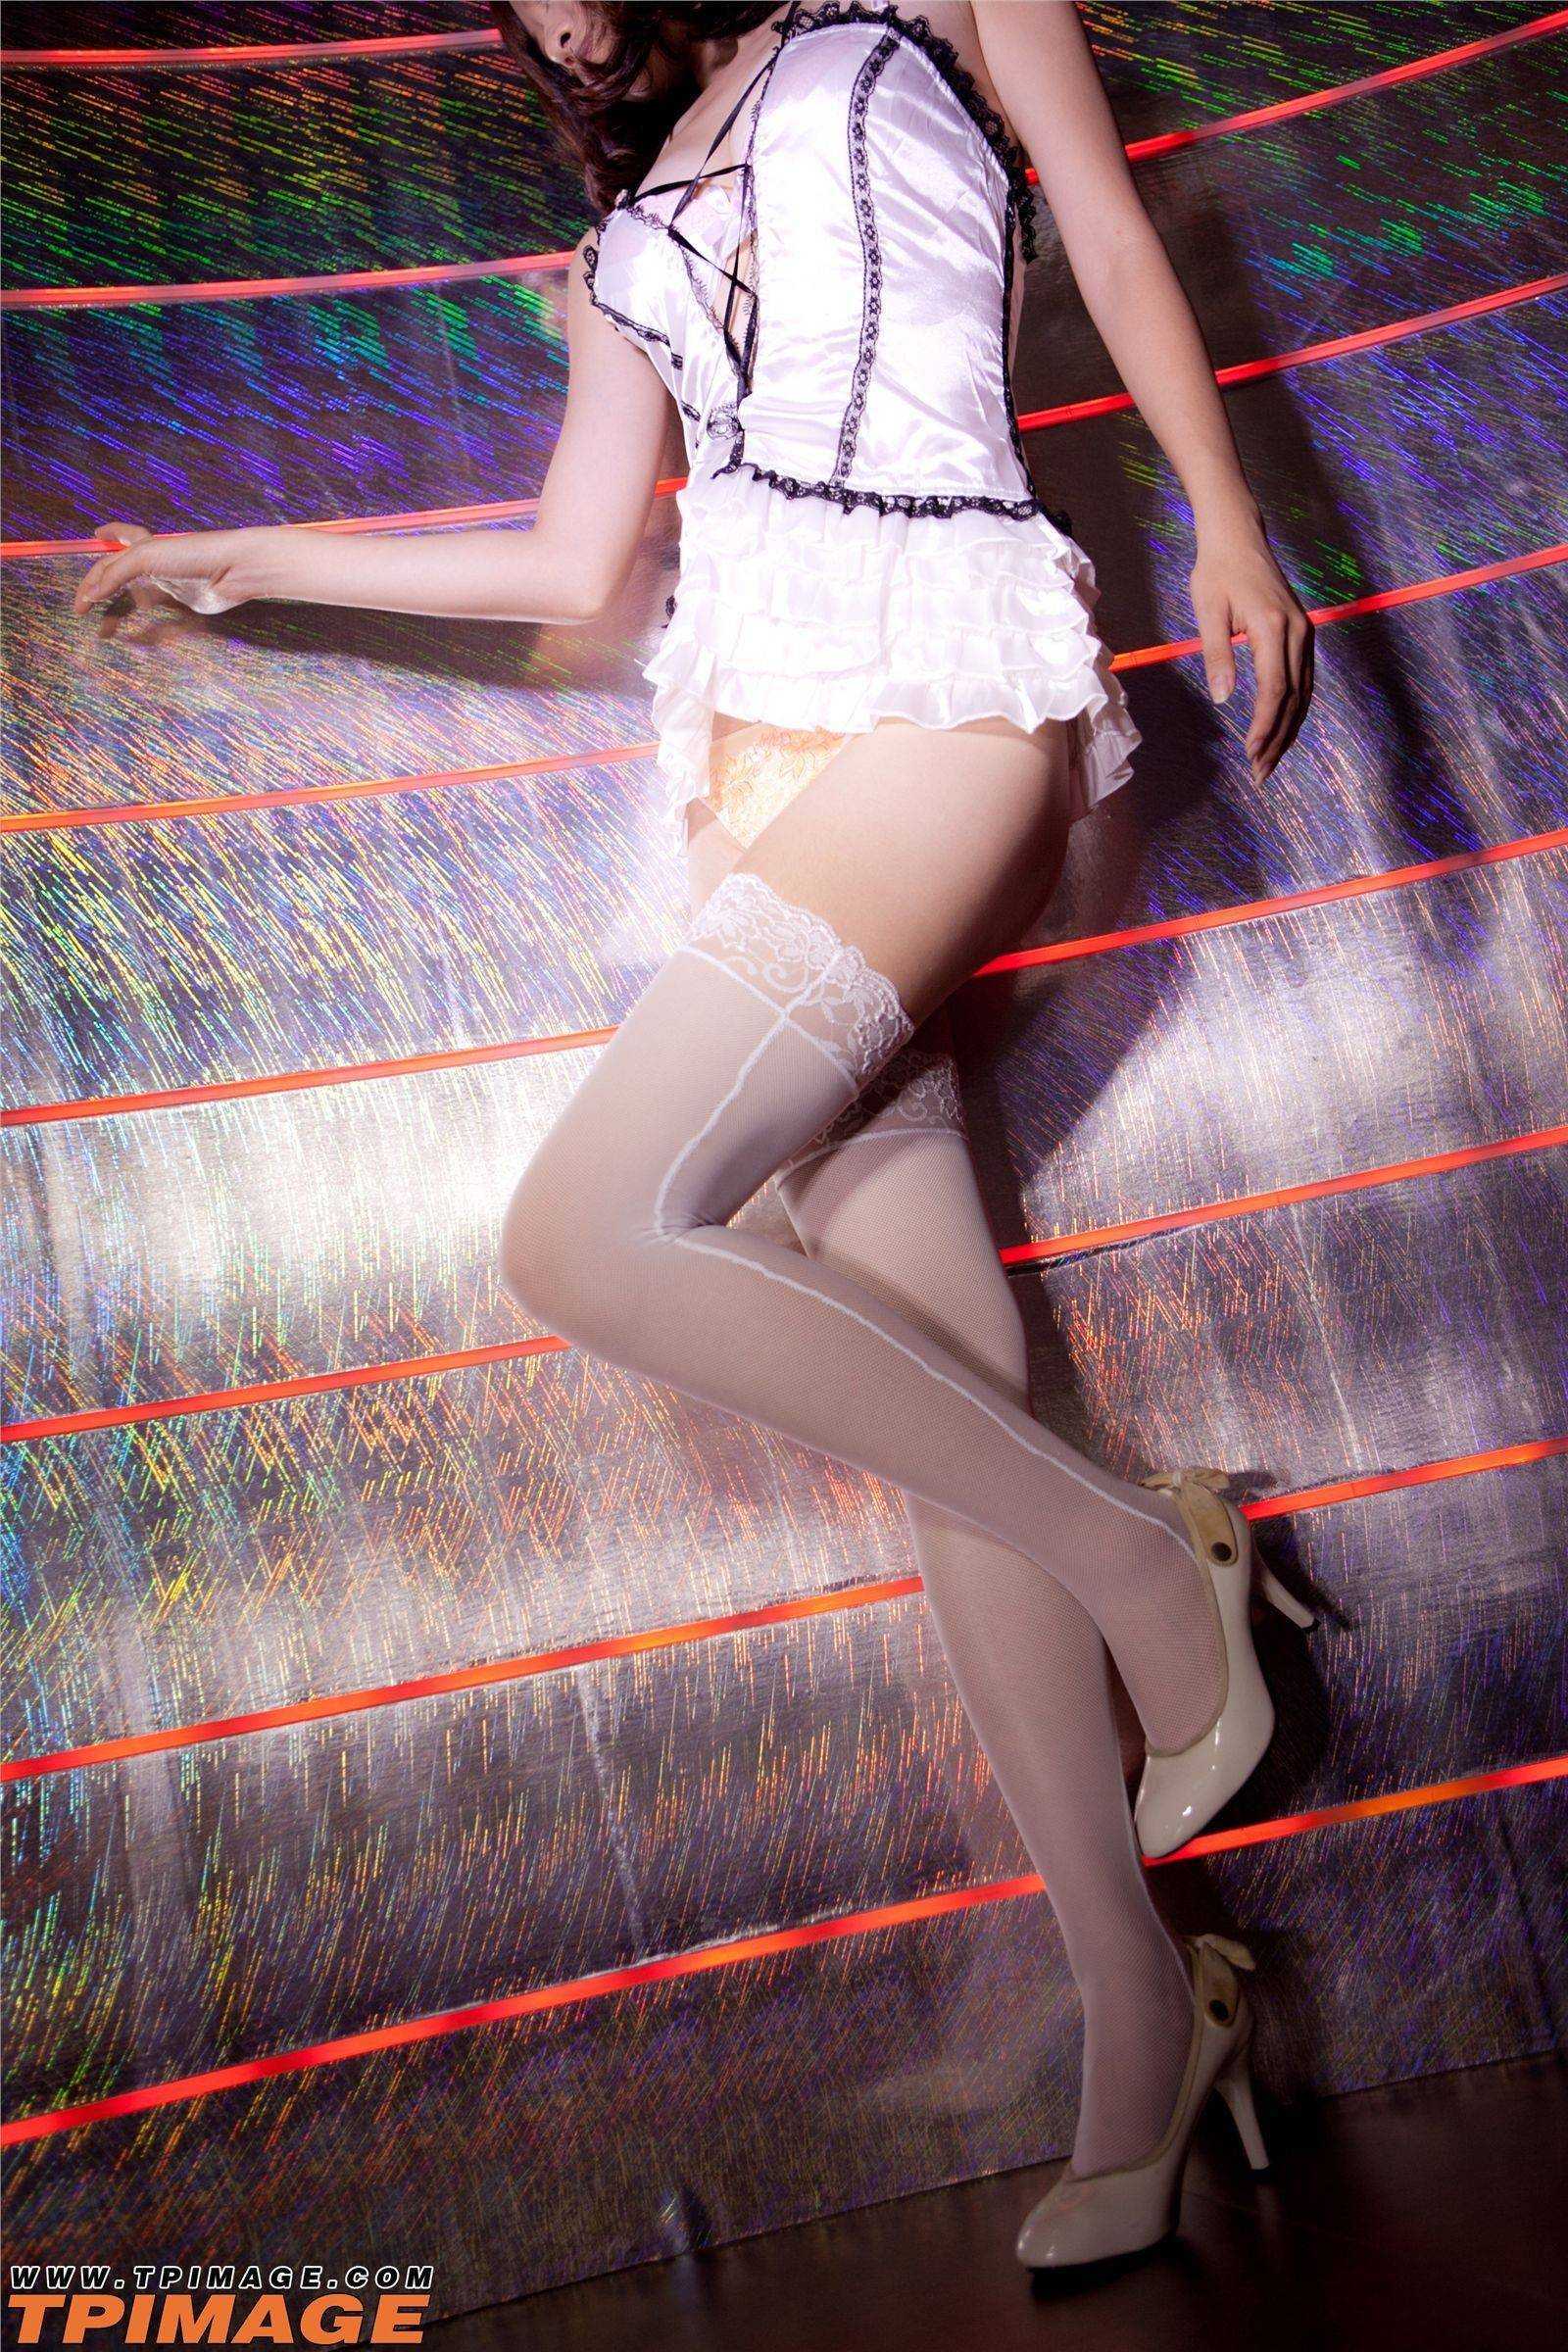 No.193 Faye Taiwan Photo girl high definition big picture underwear photo [tsimage]